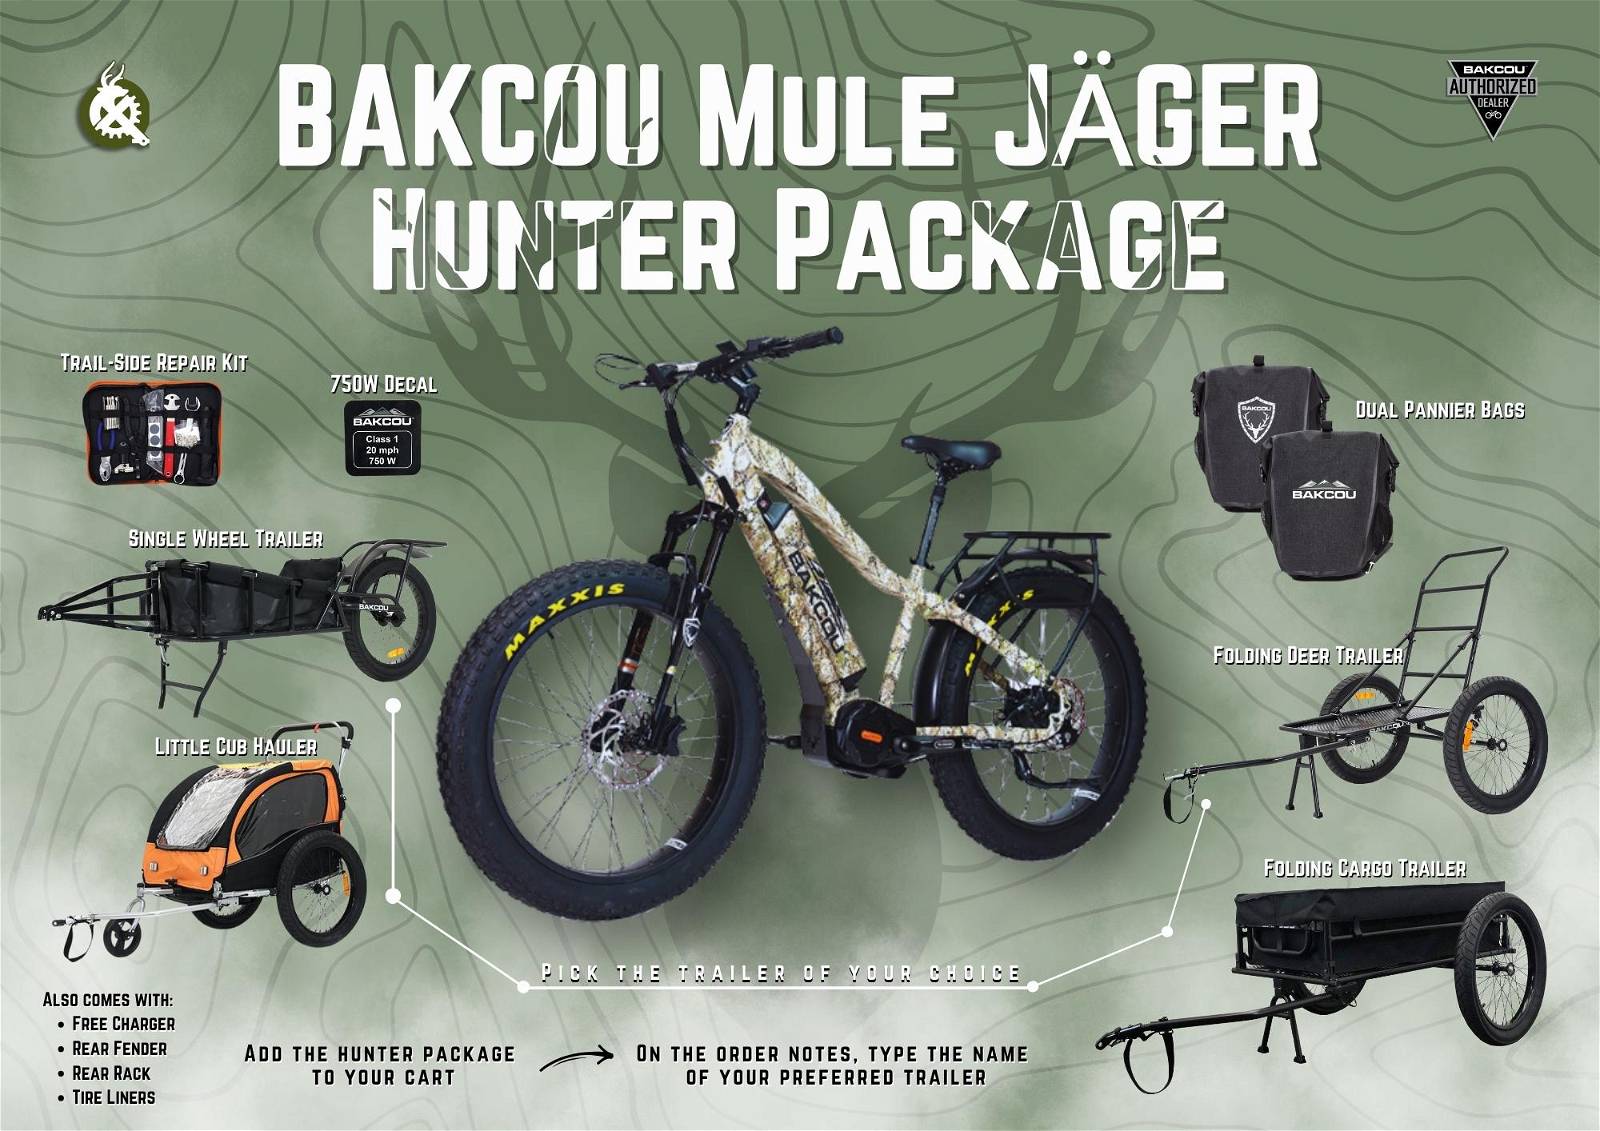 BAKCOU Mule Jäger Hunter Package